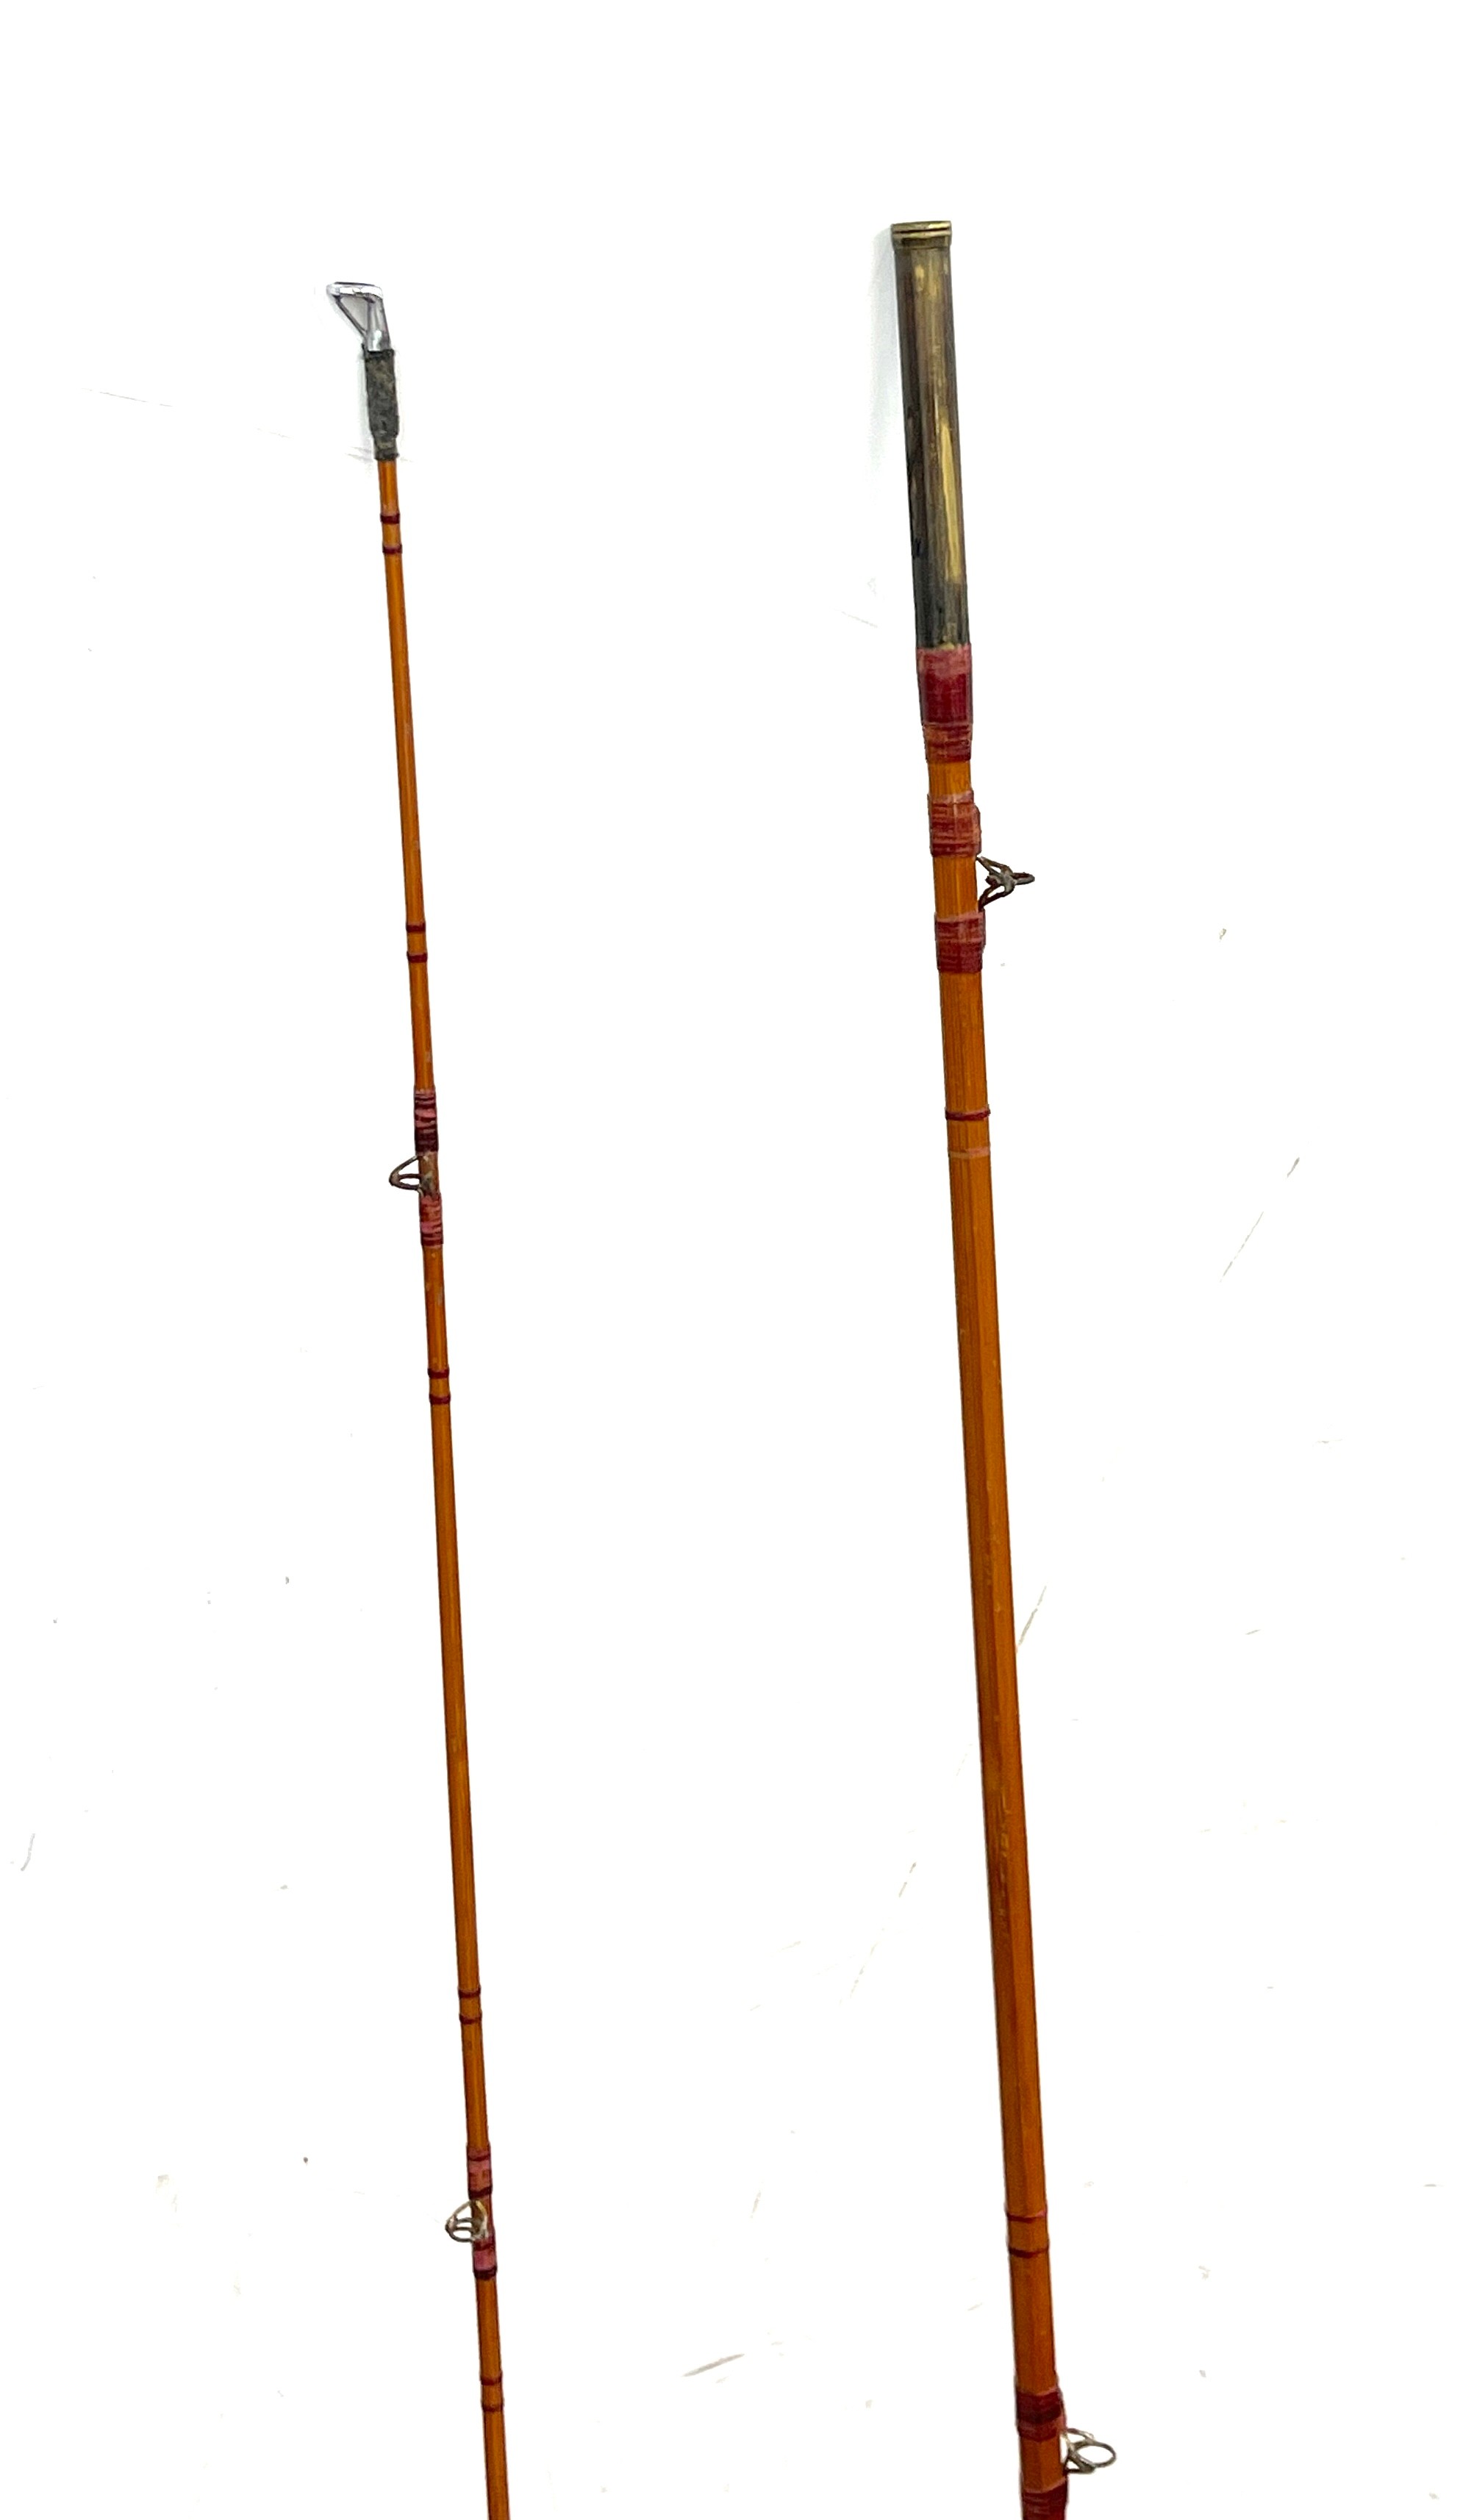 Allcock's vintage Marvel split cane fishing rod, with case - Image 6 of 8